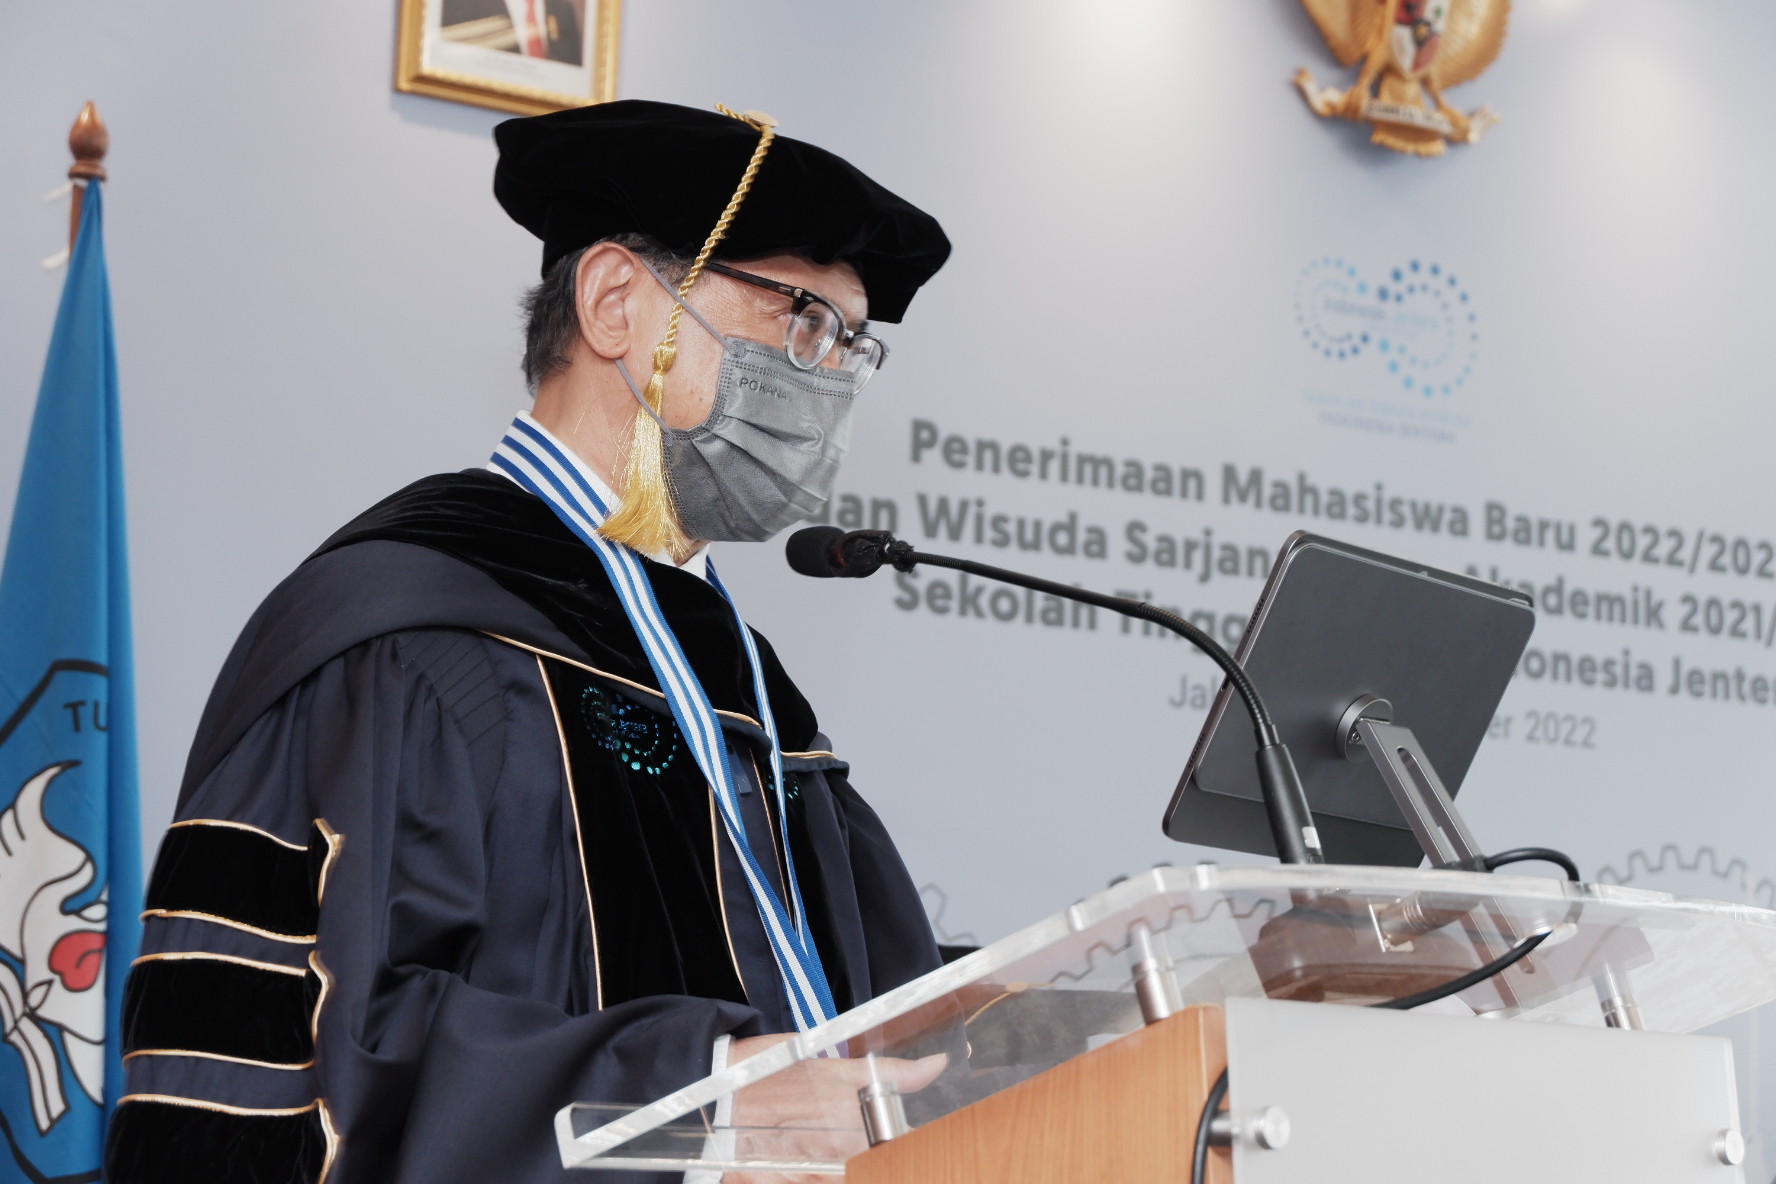 Sambutan Ketua Sekolah Tinggi Hukum Indonesia Jentera dalam Wisuda Sarjana Keempat dan Penerimaan Mahasiswa Baru